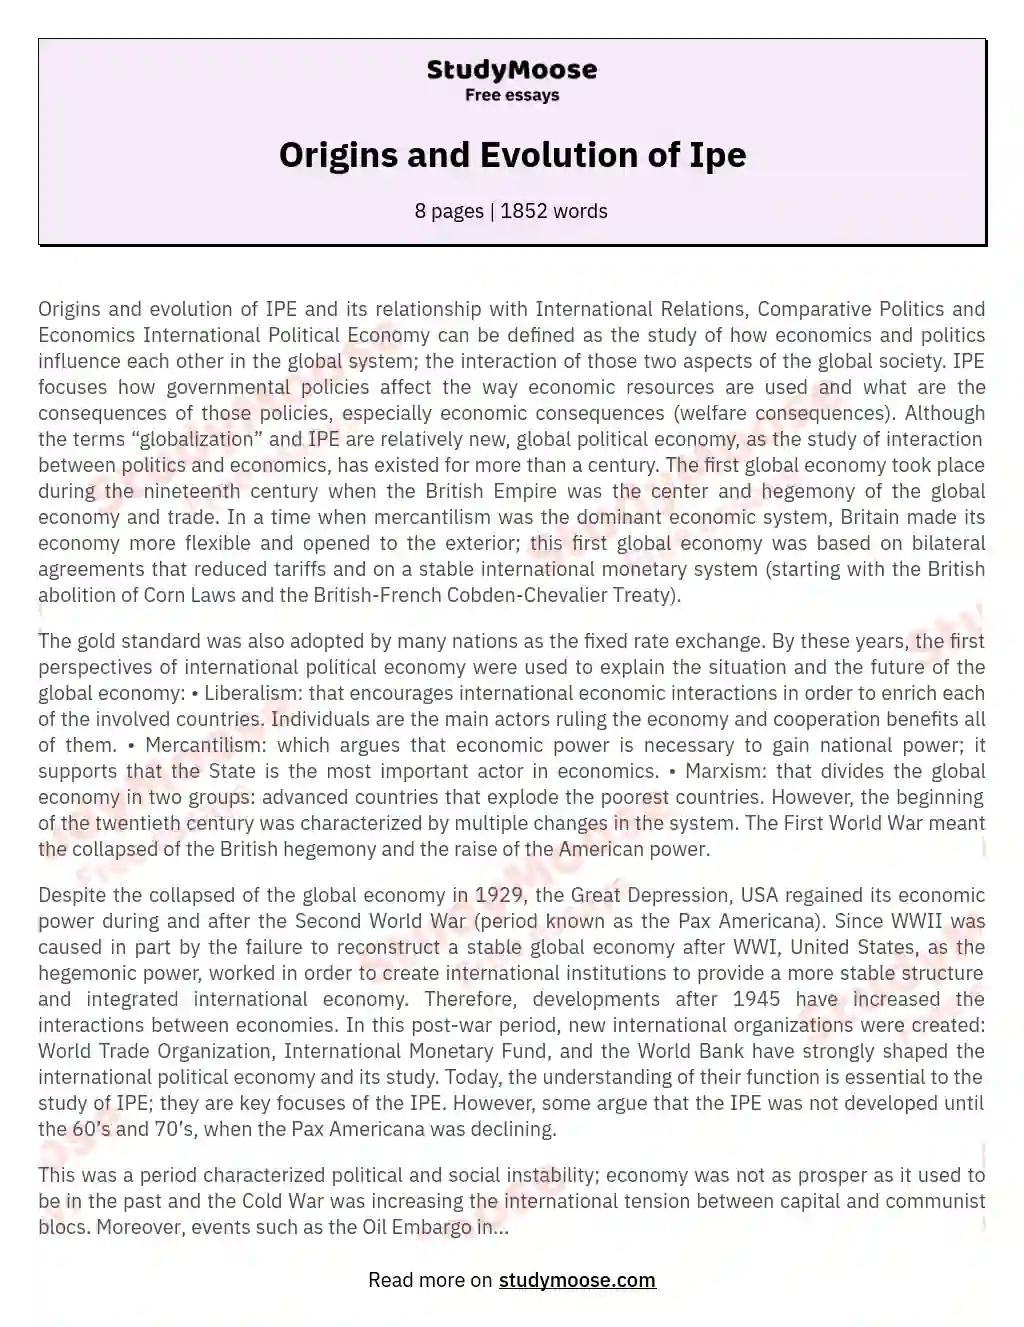 Origins and Evolution of Ipe